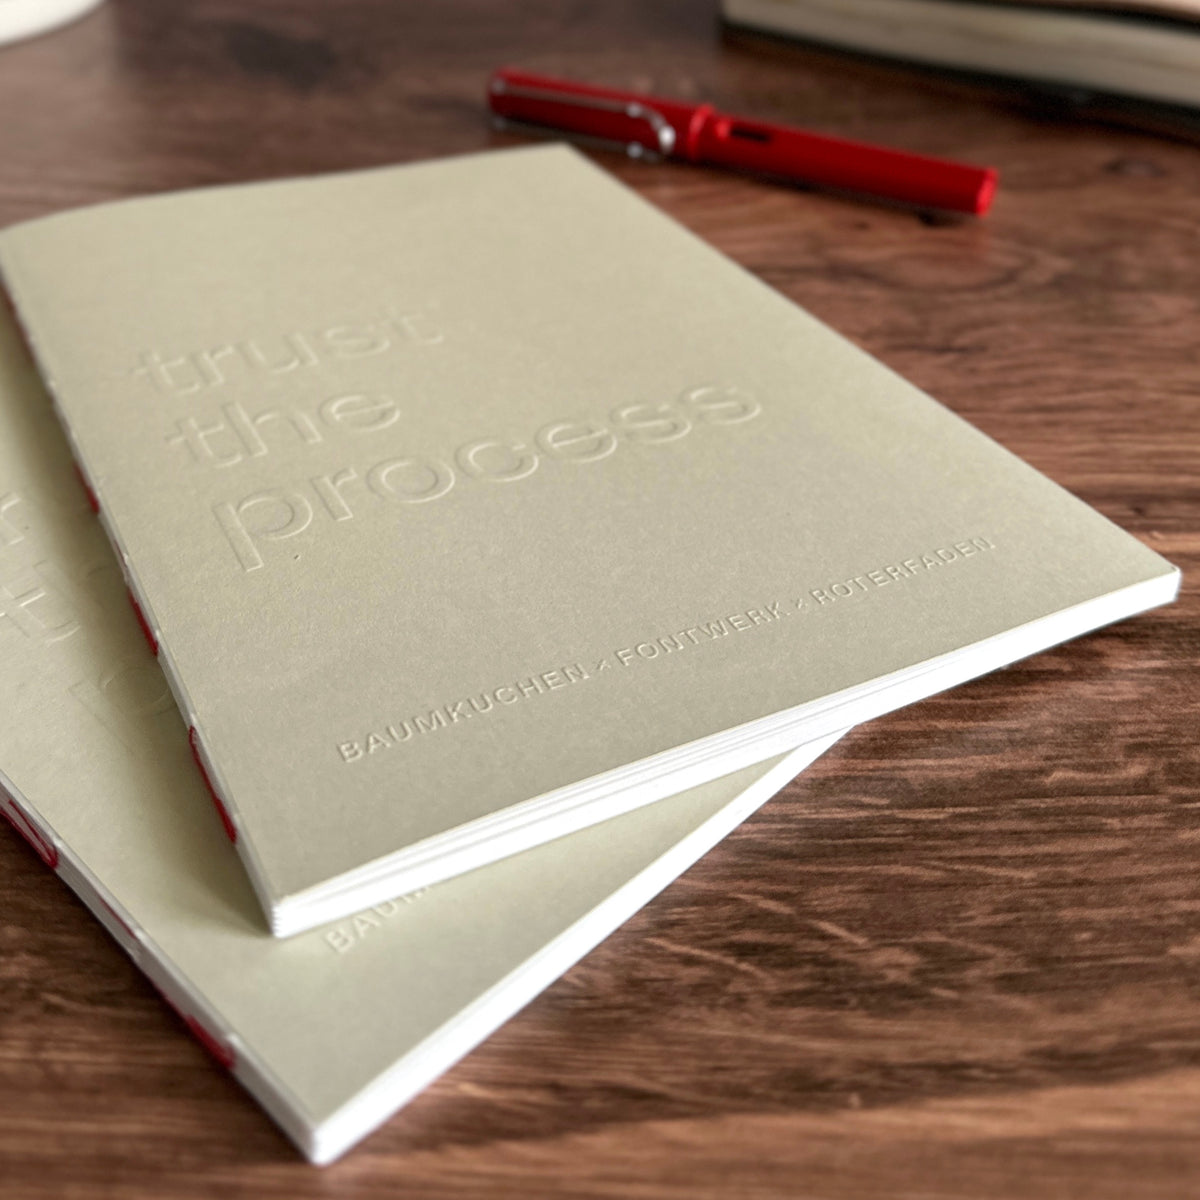 [Roterfaden] "Trust the Process" Notebook (A5)